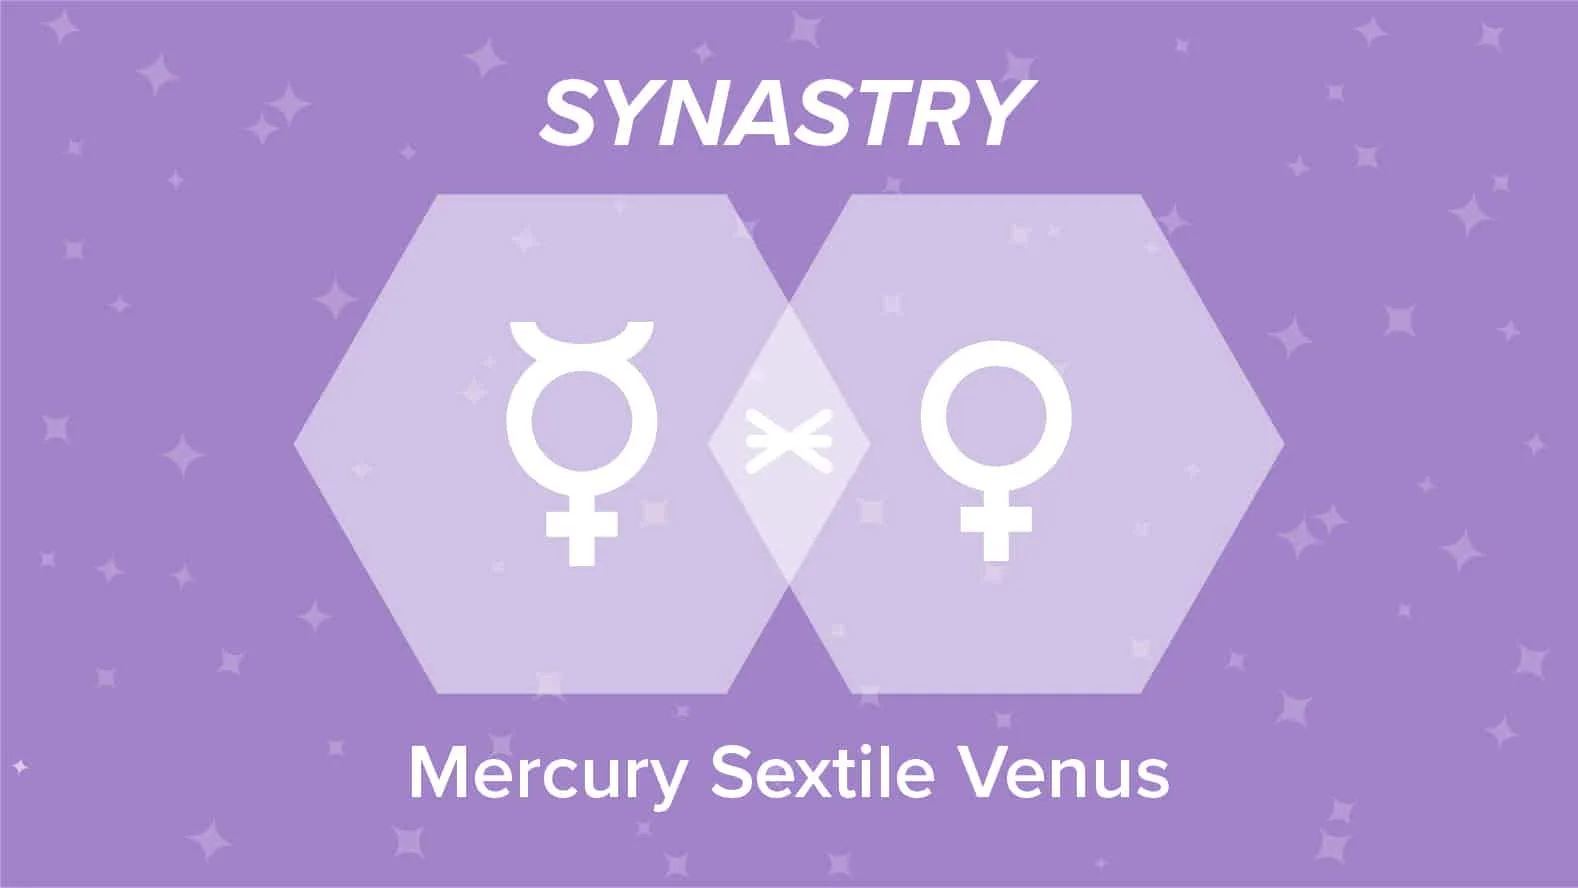 Mercury Sextile Venus Synastry